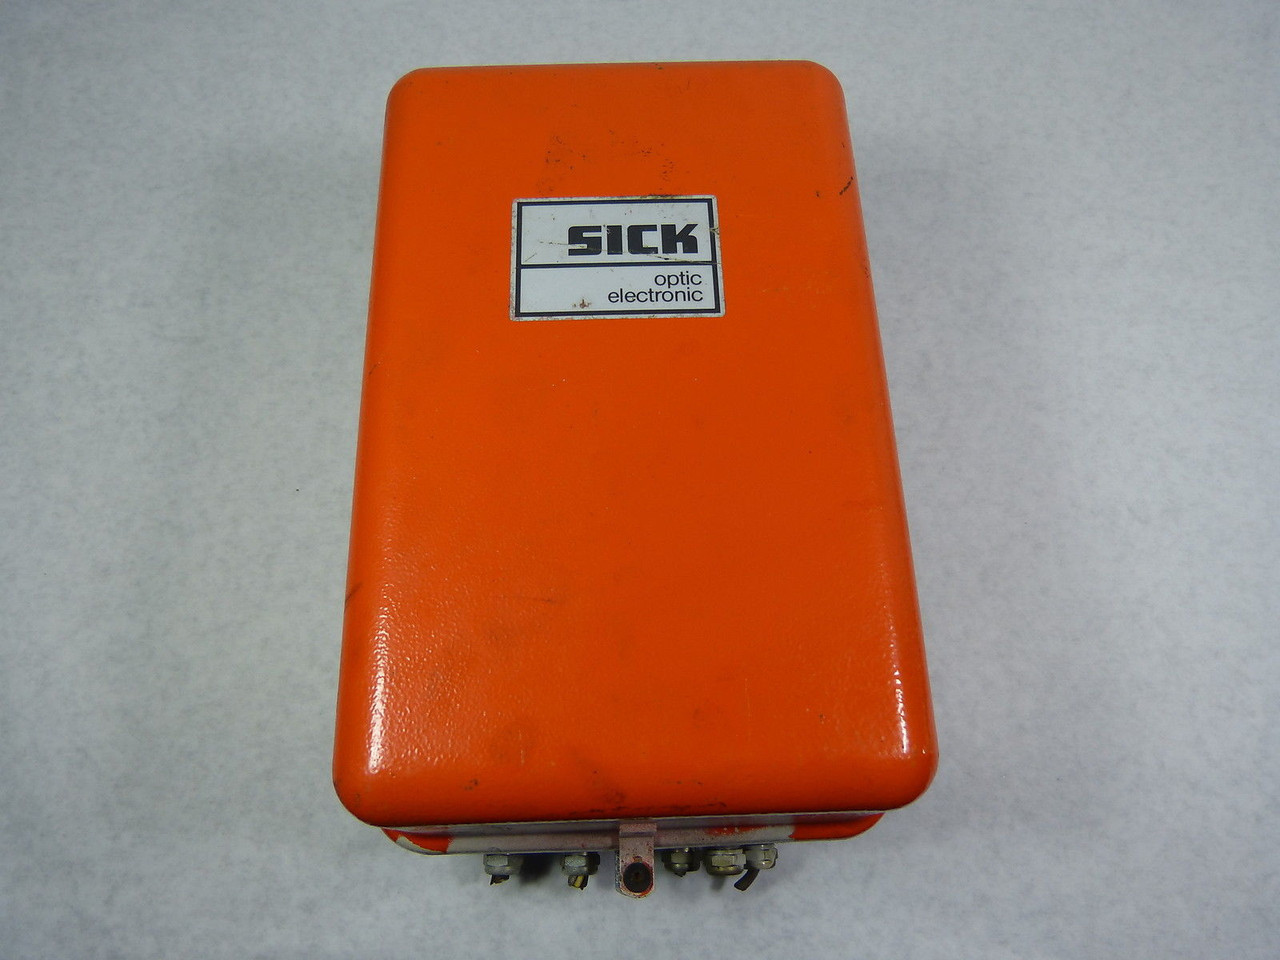 Sick Optic MV5-4711 MV5-0711 Drive Amplifier 1.6A 50/60Hz 120VAC USED